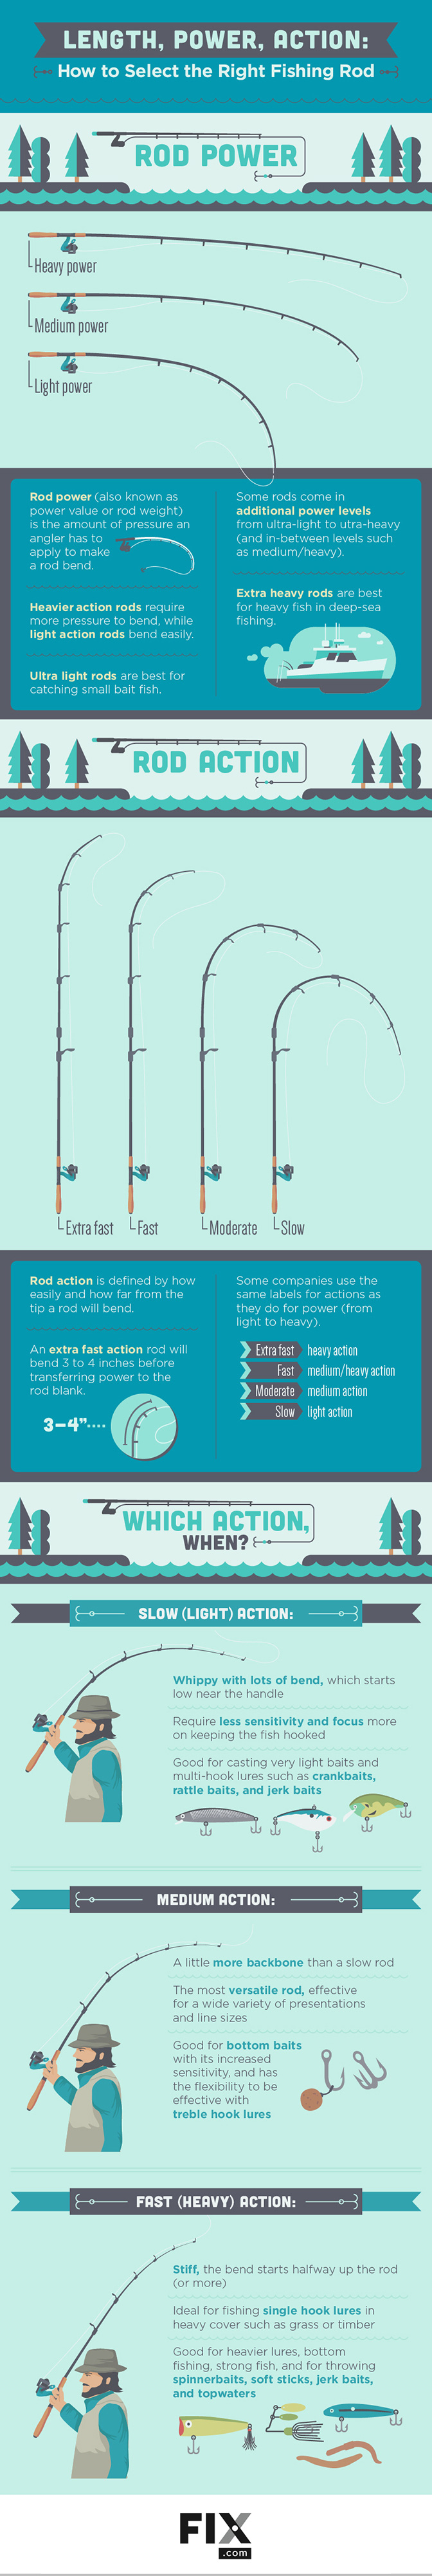 How to Choose a Fishing Rod | Fix.com